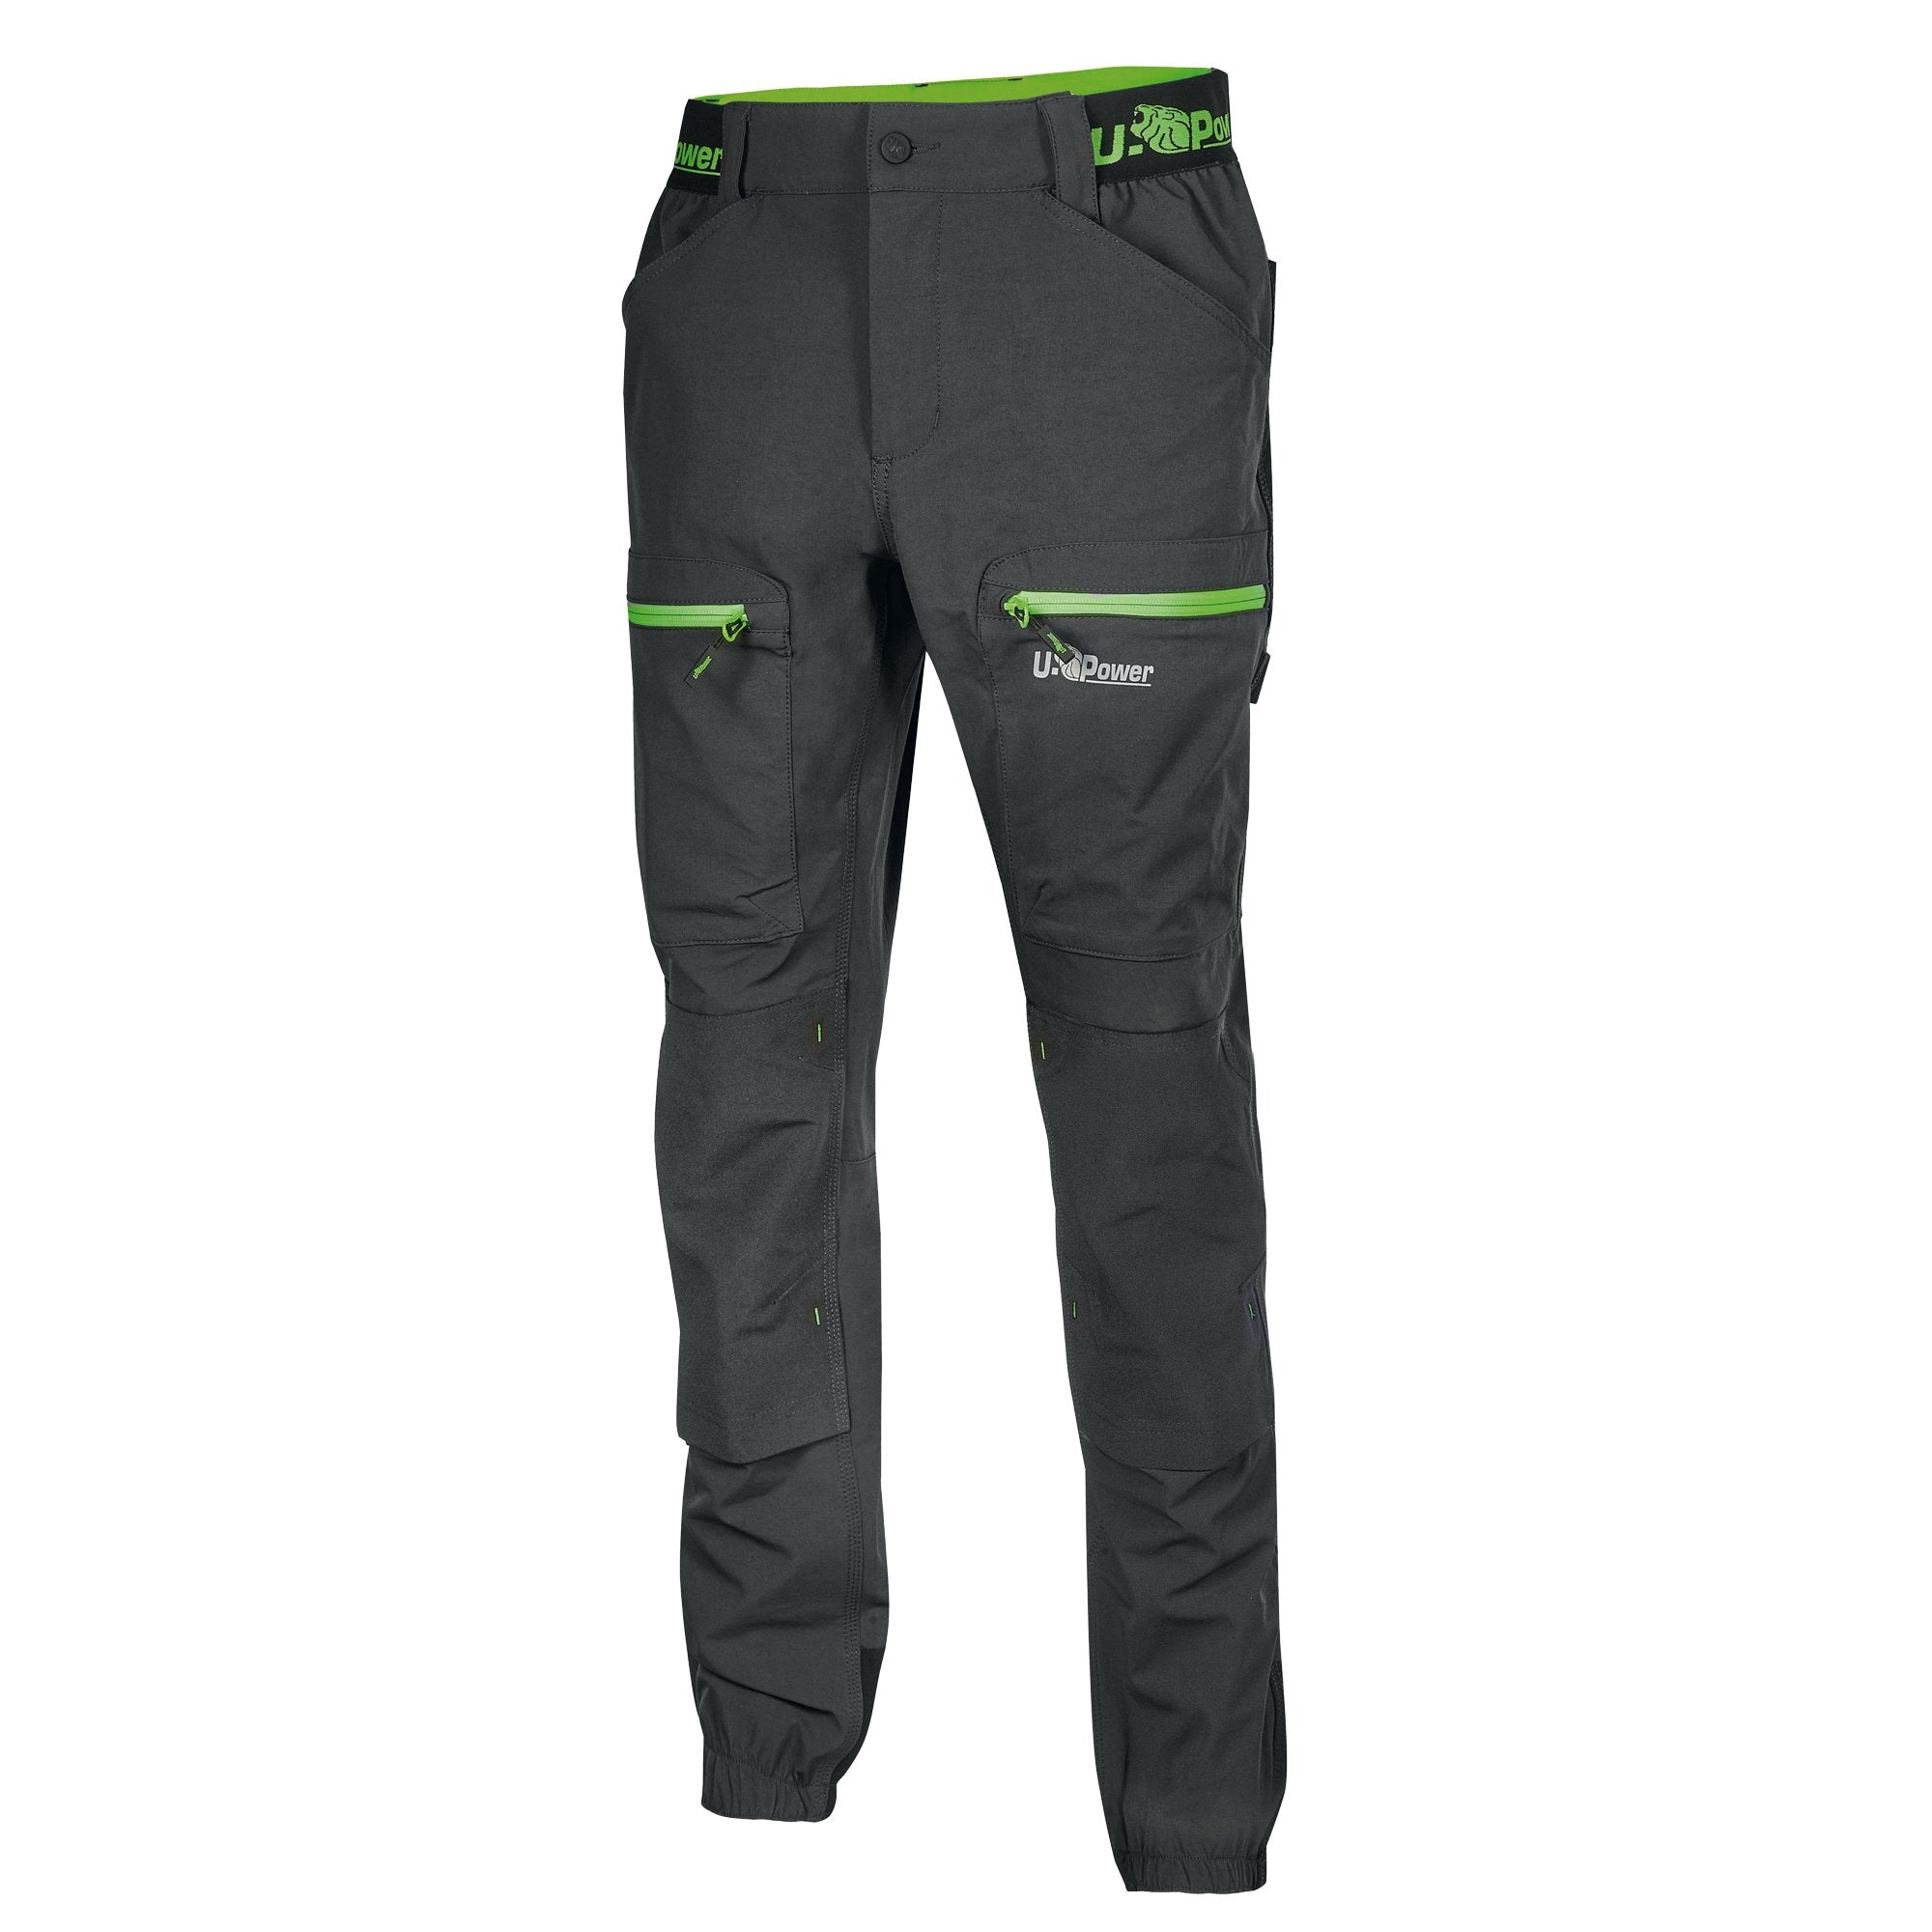 u-power-pantalone-horizon-taglia-m-nero-verde